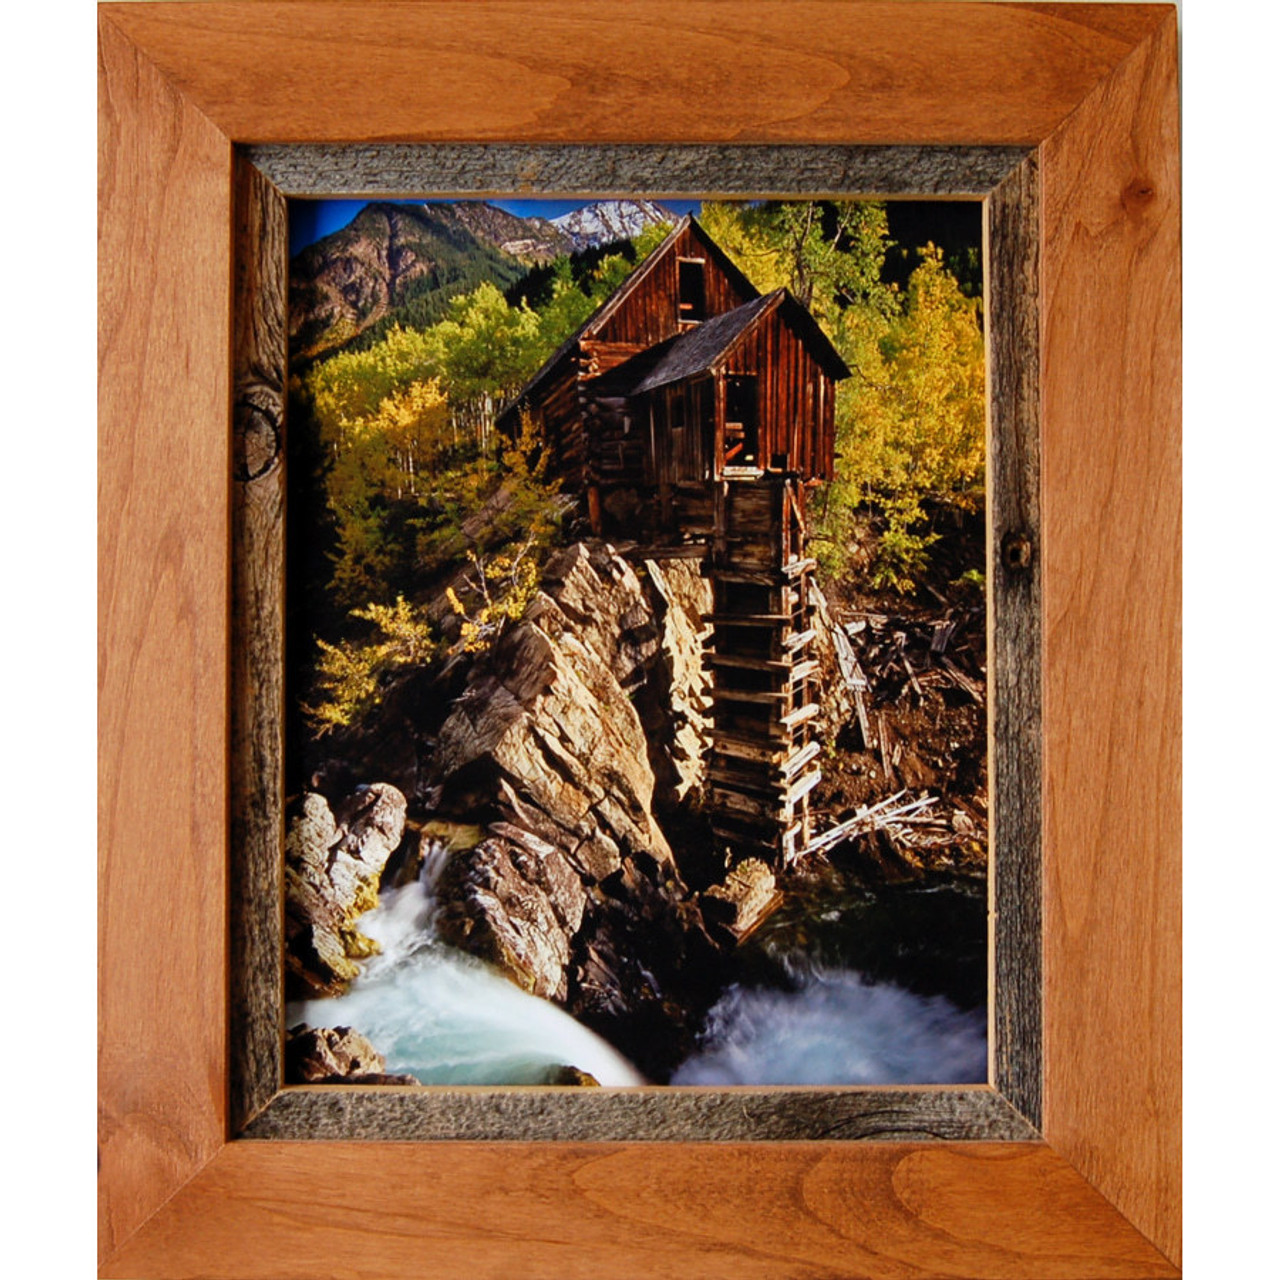 Barnwood Frames  8x8 Rustic Wood Picture Frame